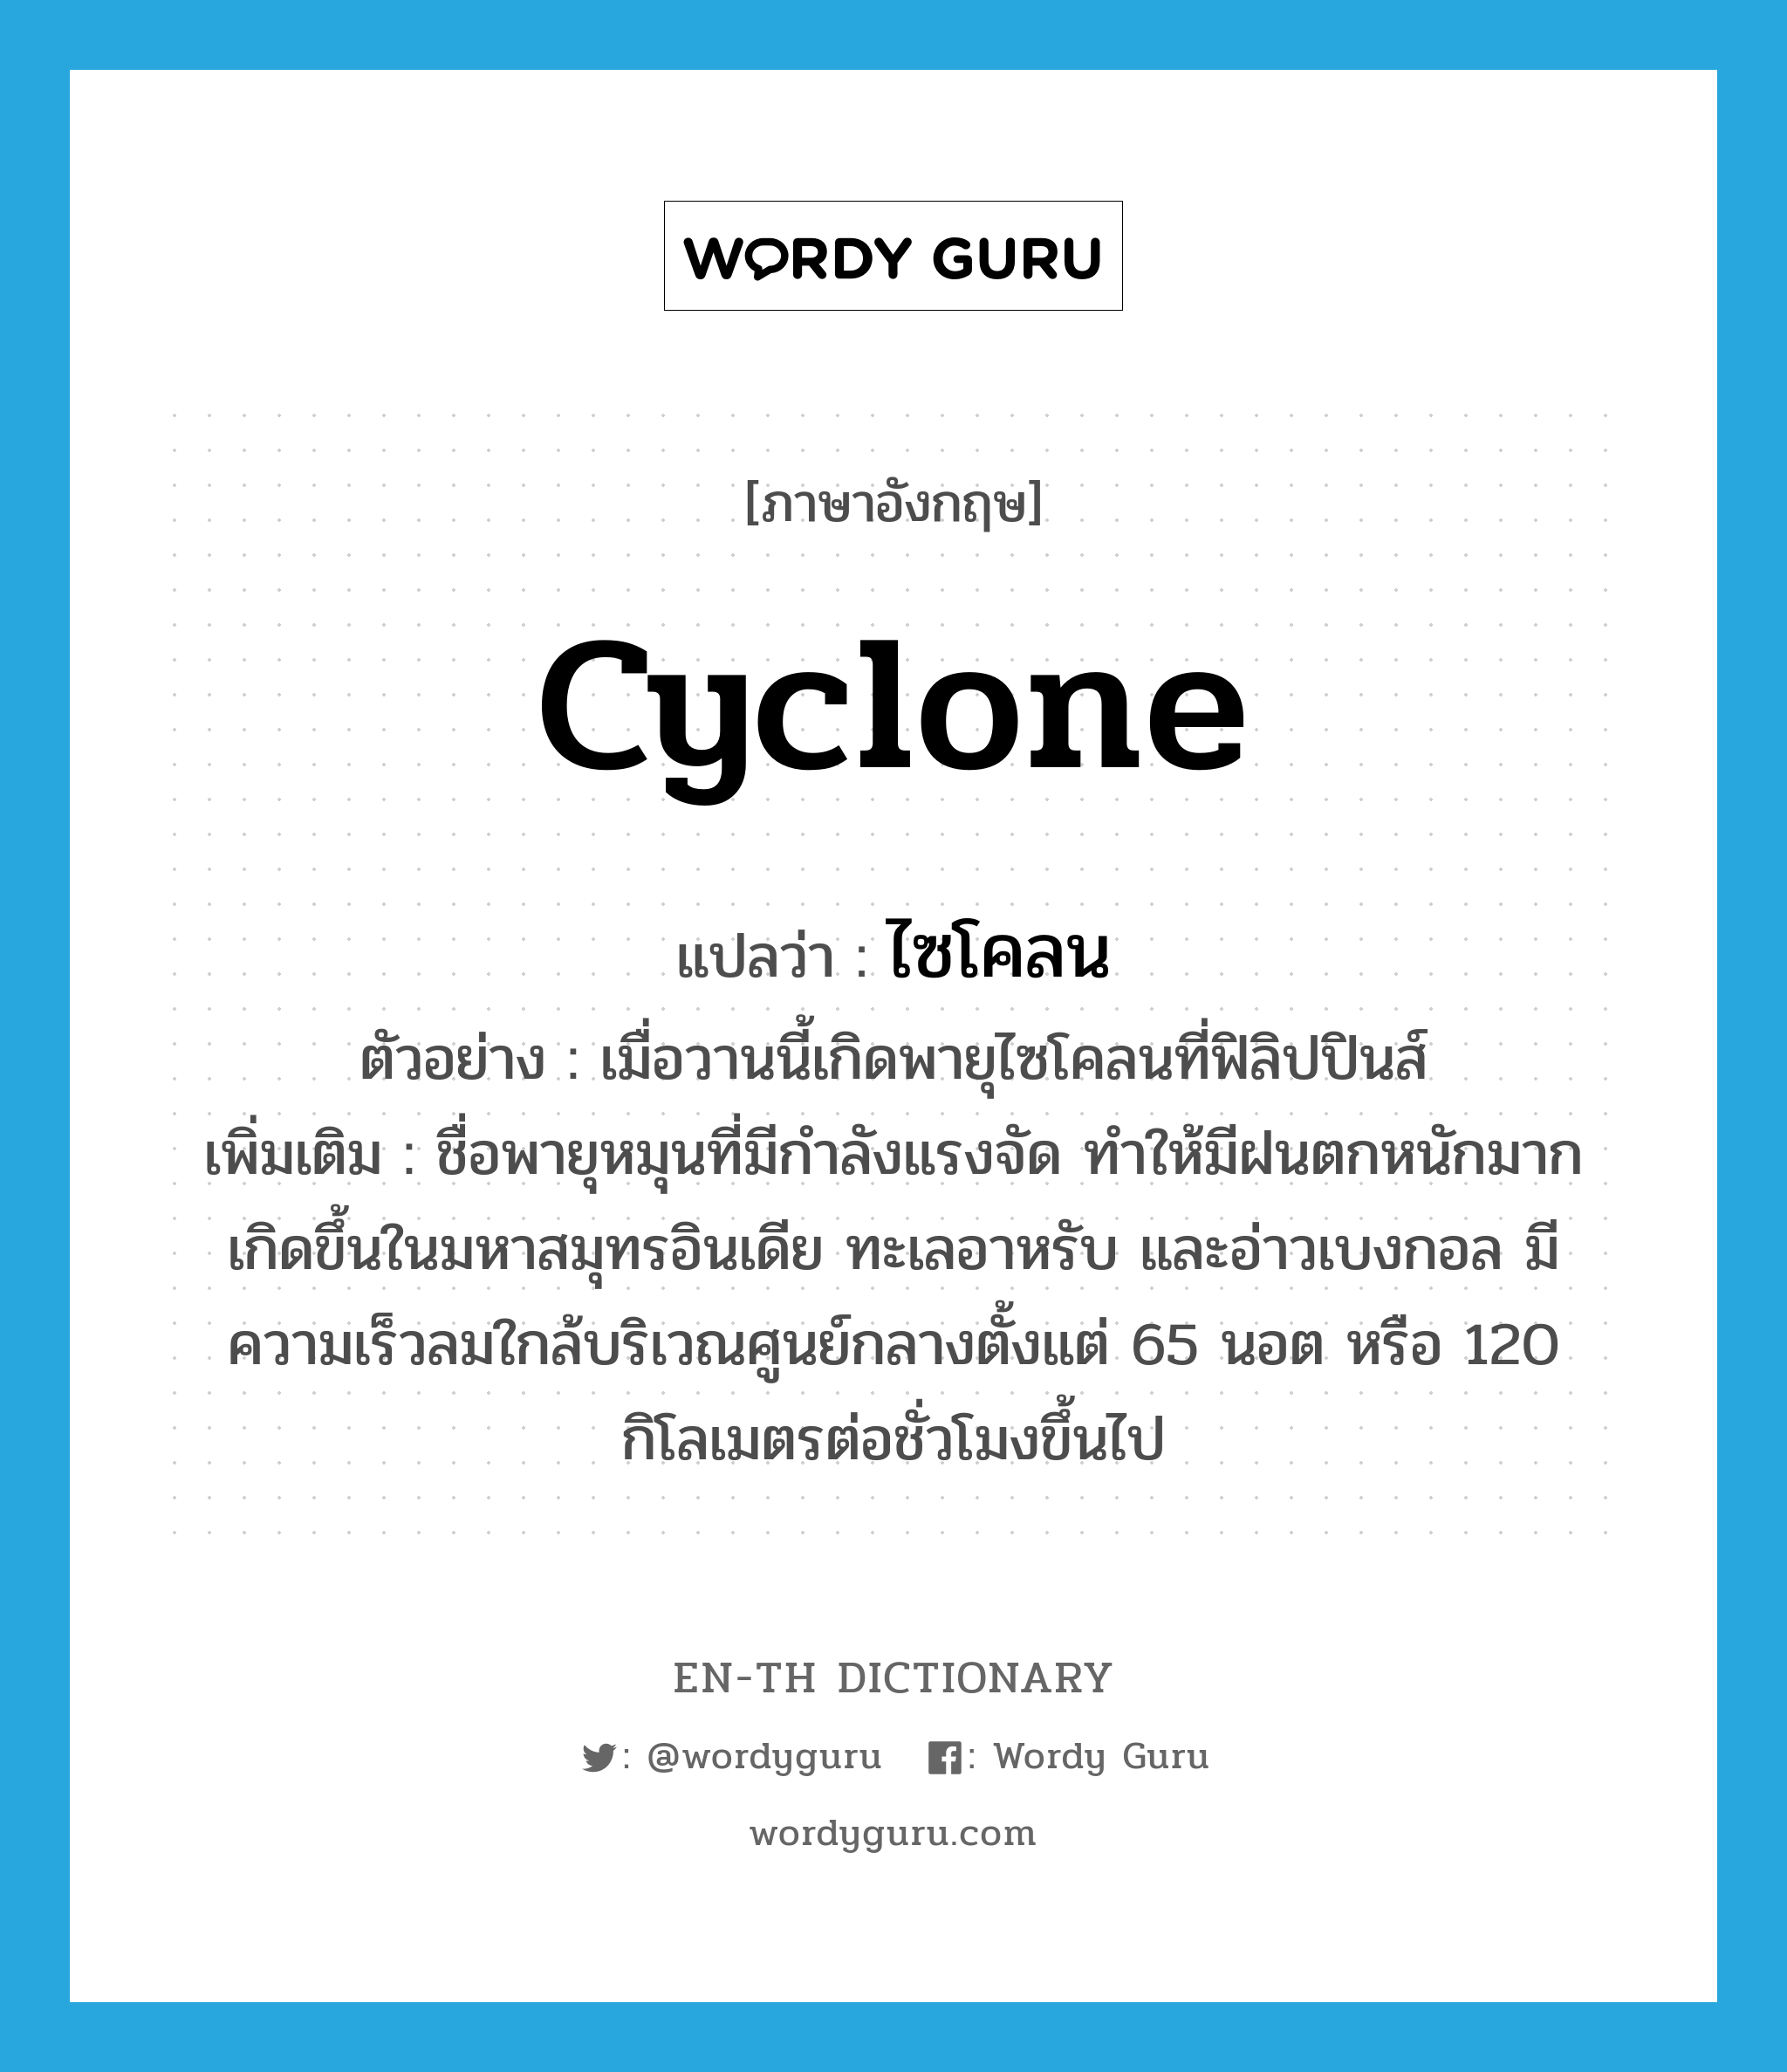 cyclone แปลว่า?, คำศัพท์ภาษาอังกฤษ cyclone แปลว่า ไซโคลน ประเภท N ตัวอย่าง เมื่อวานนี้เกิดพายุไซโคลนที่ฟิลิปปินส์ เพิ่มเติม ชื่อพายุหมุนที่มีกำลังแรงจัด ทำให้มีฝนตกหนักมาก เกิดขึ้นในมหาสมุทรอินเดีย ทะเลอาหรับ และอ่าวเบงกอล มีความเร็วลมใกล้บริเวณศูนย์กลางตั้งแต่ 65 นอต หรือ 120 กิโลเมตรต่อชั่วโมงขึ้นไป หมวด N